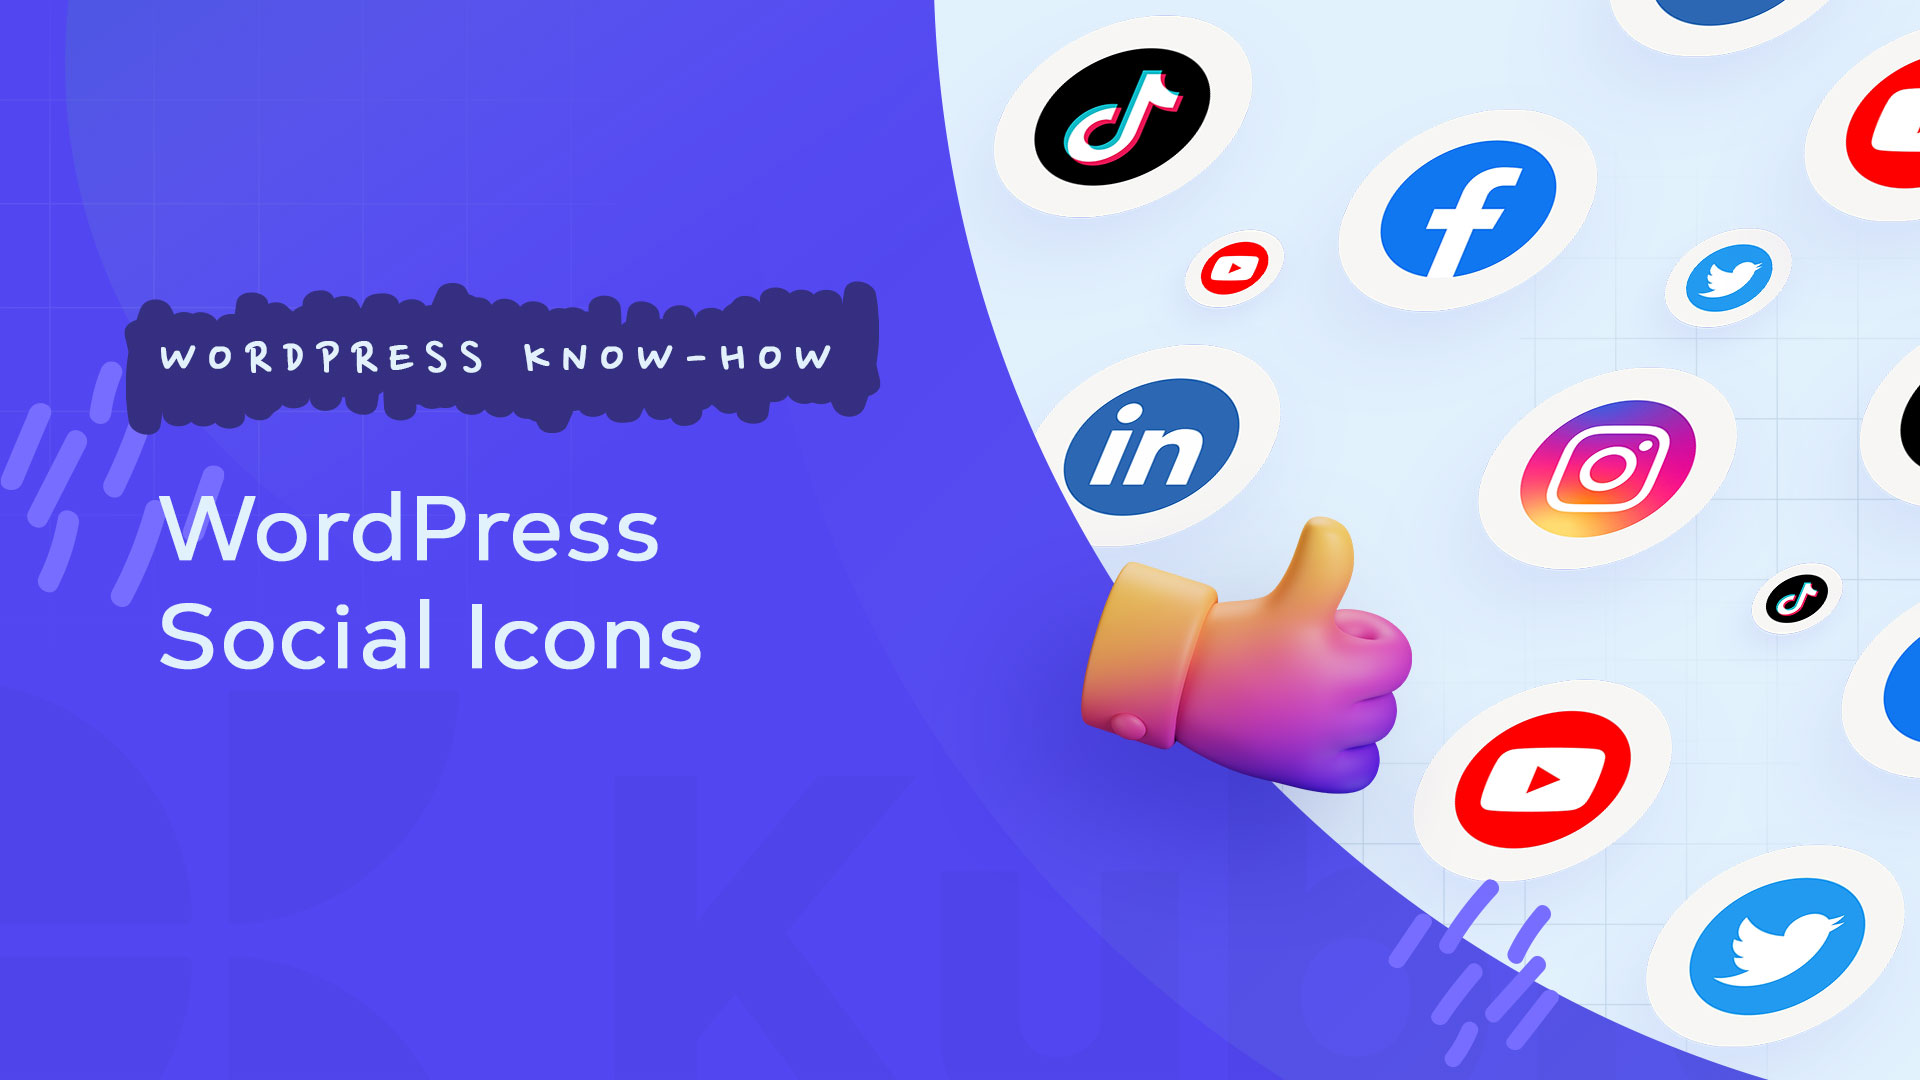 WordPress social icons